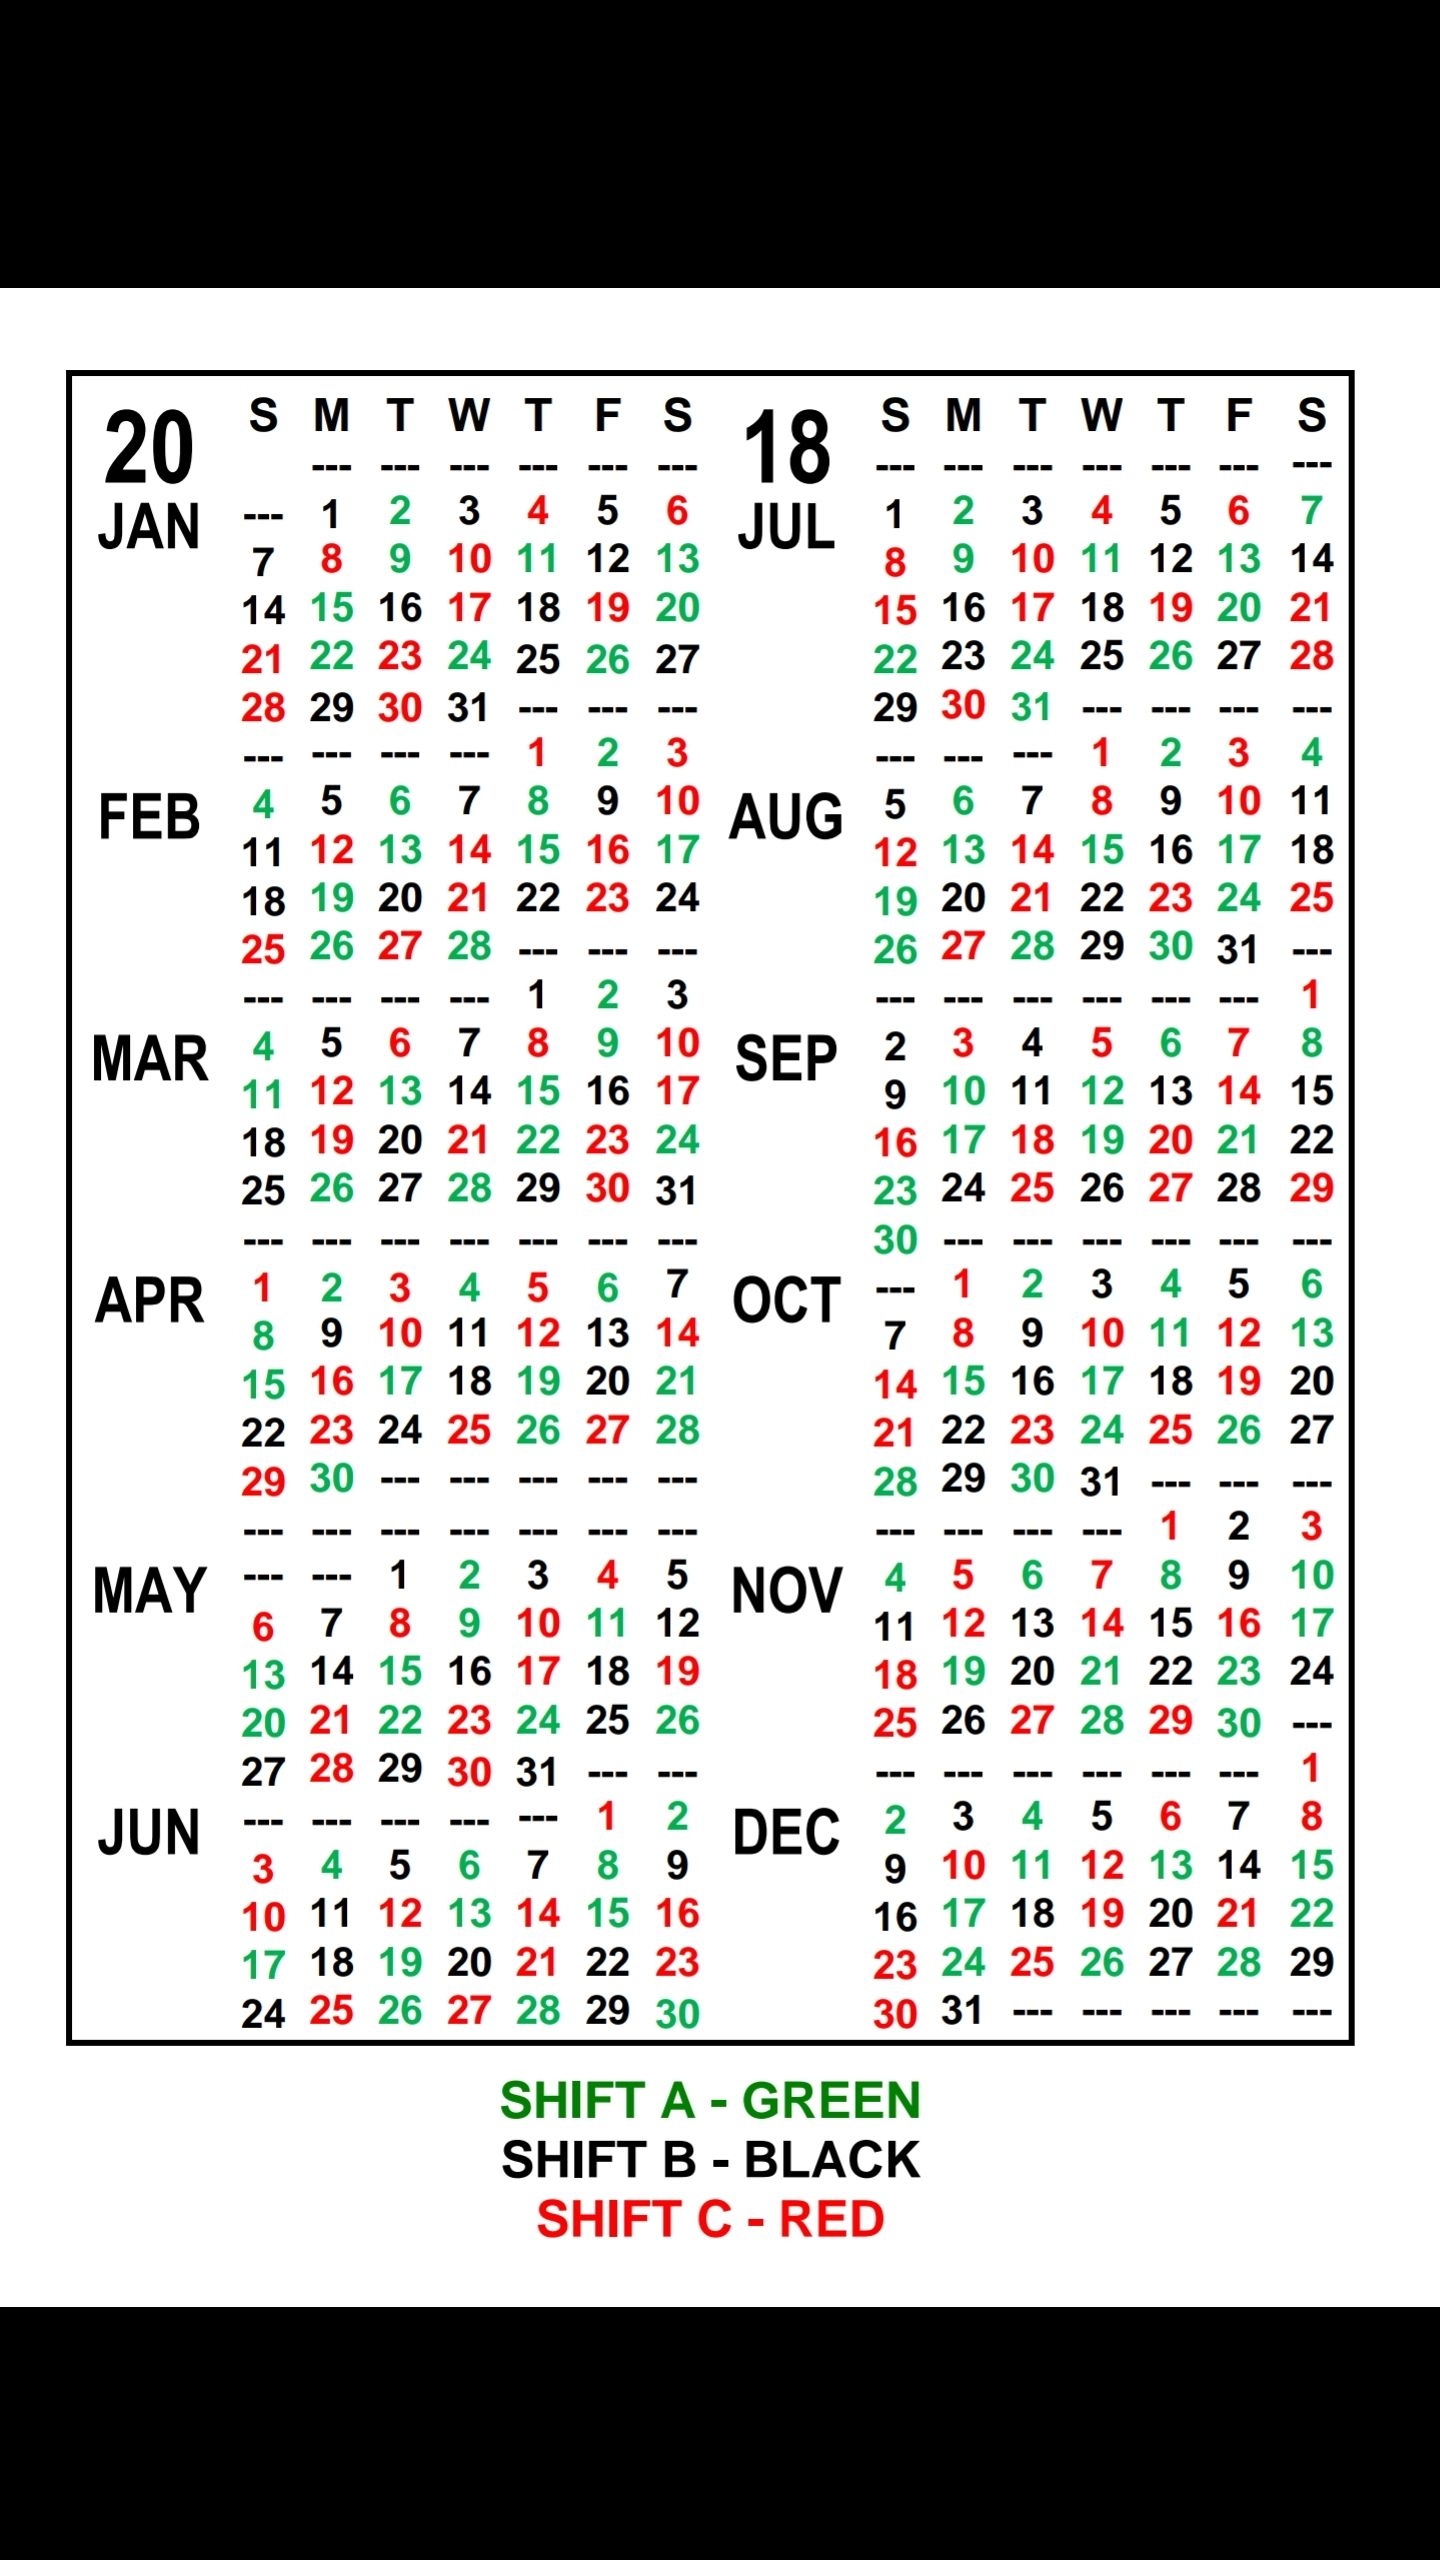 printable 2021 shift calendars for firefighters | calendar